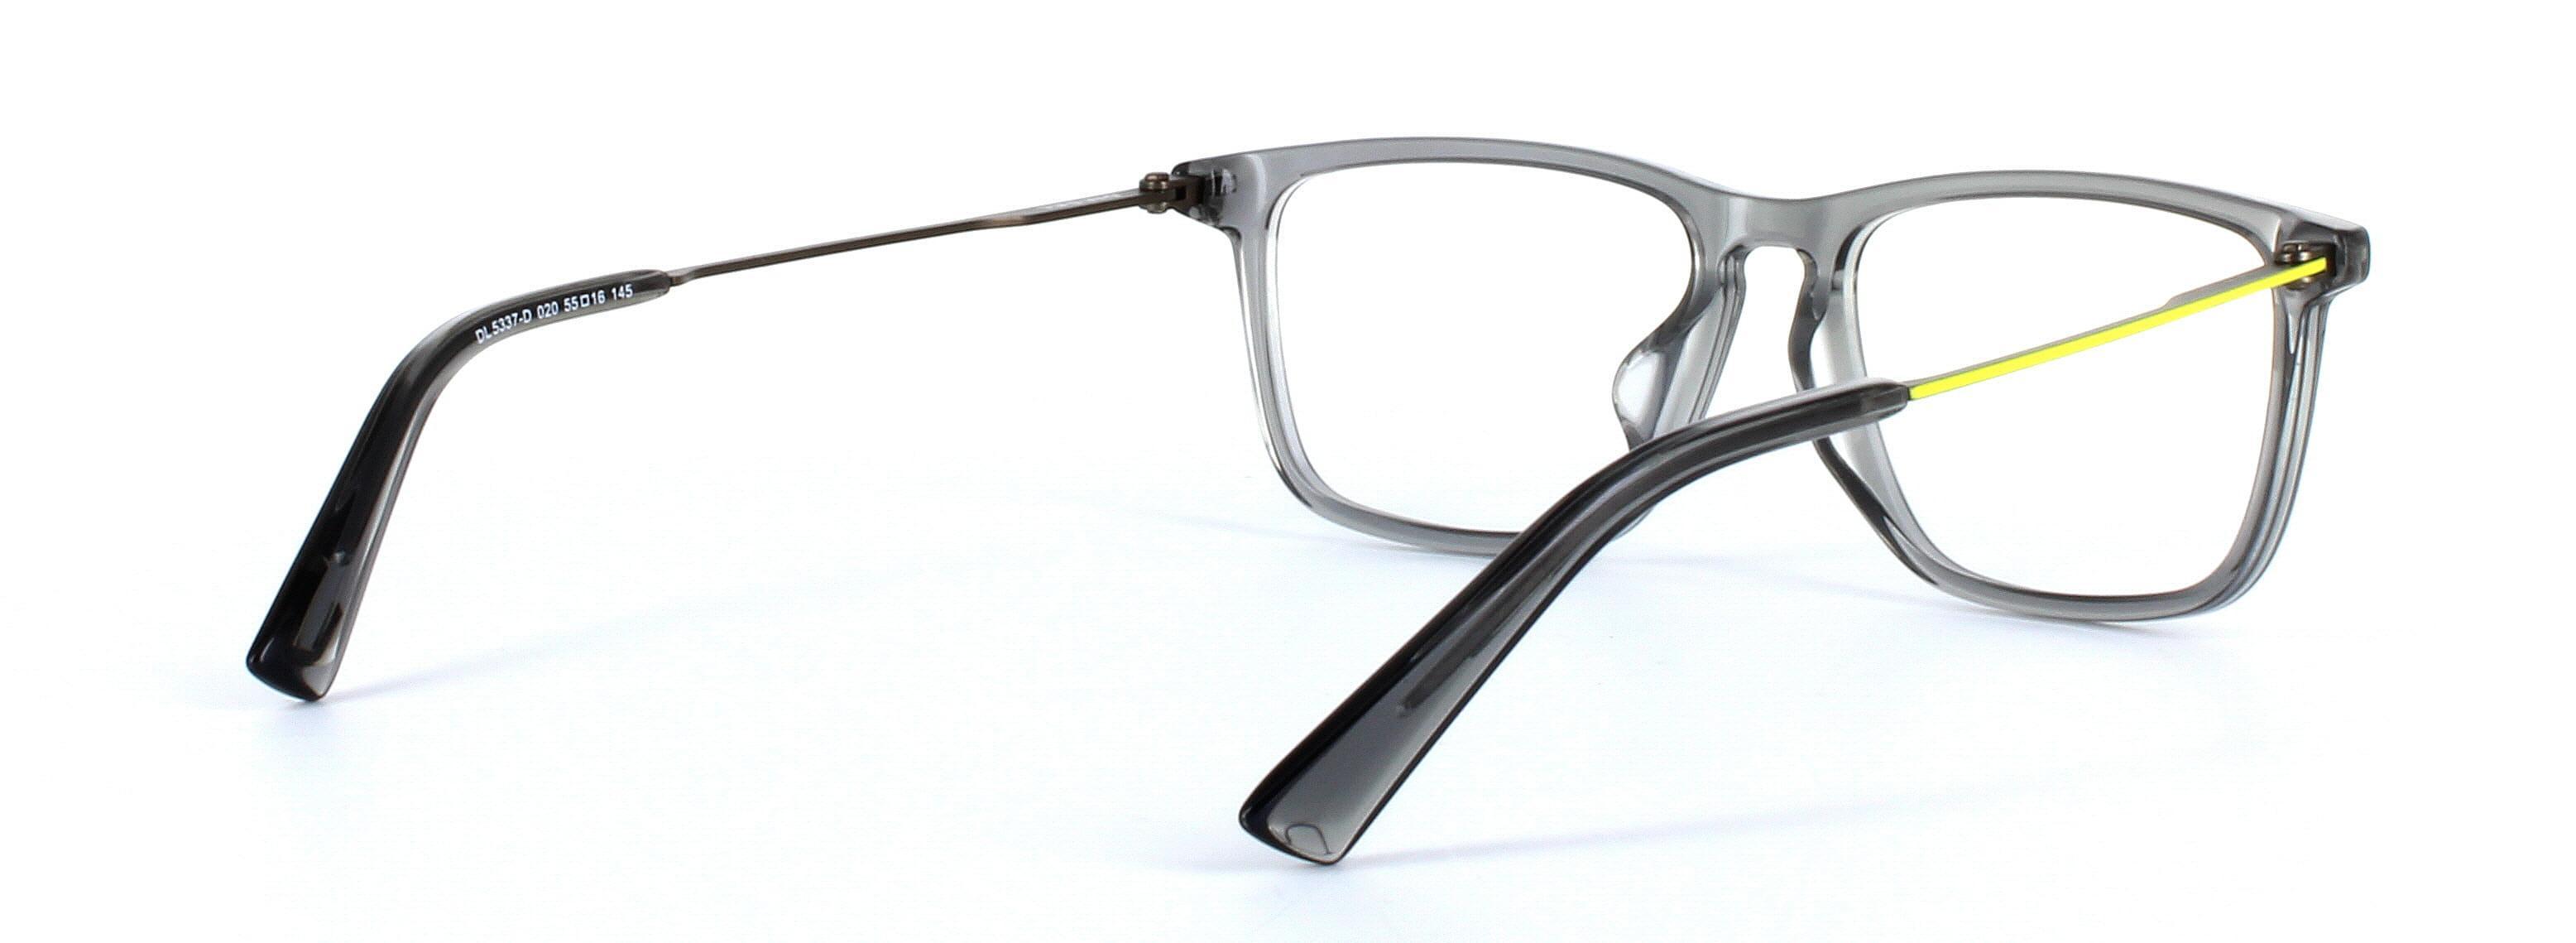 Diesel (DL5337-020) Crystal Grey Full Rim Rectangular Oval Acetate Glasses - Image View 4